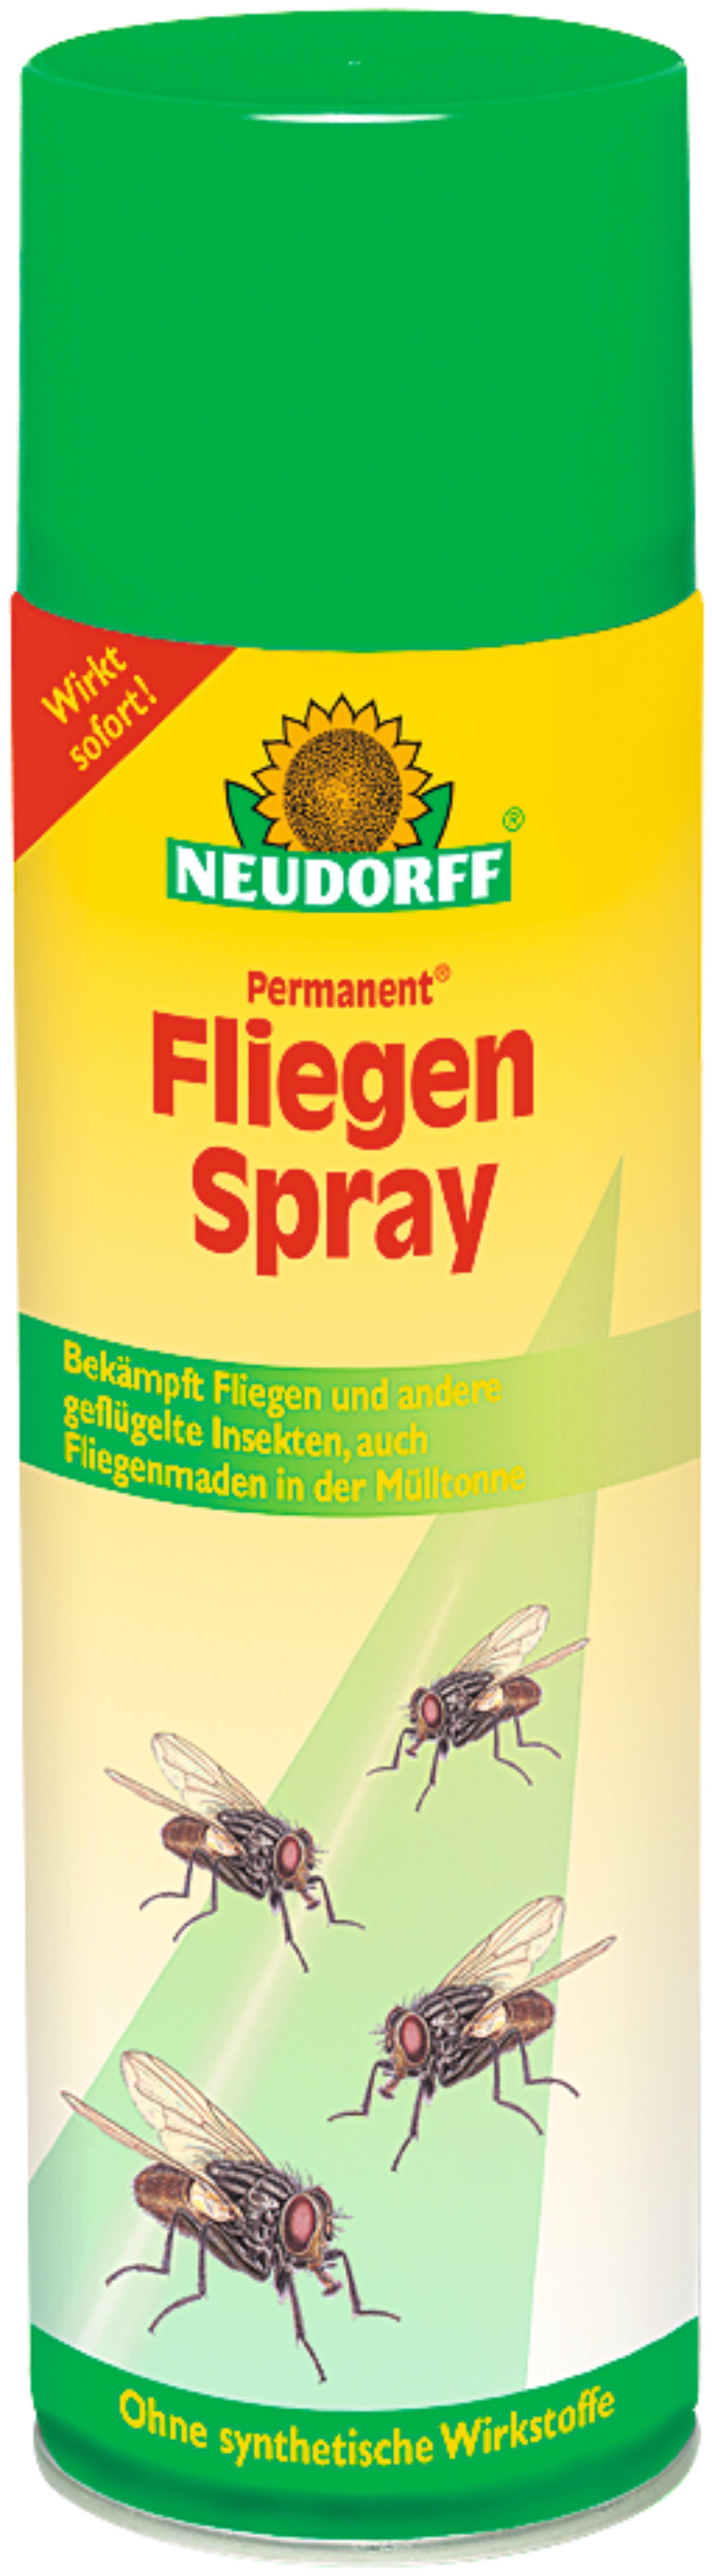 NEUDORFF® Permanent FliegenSpray 750 ml